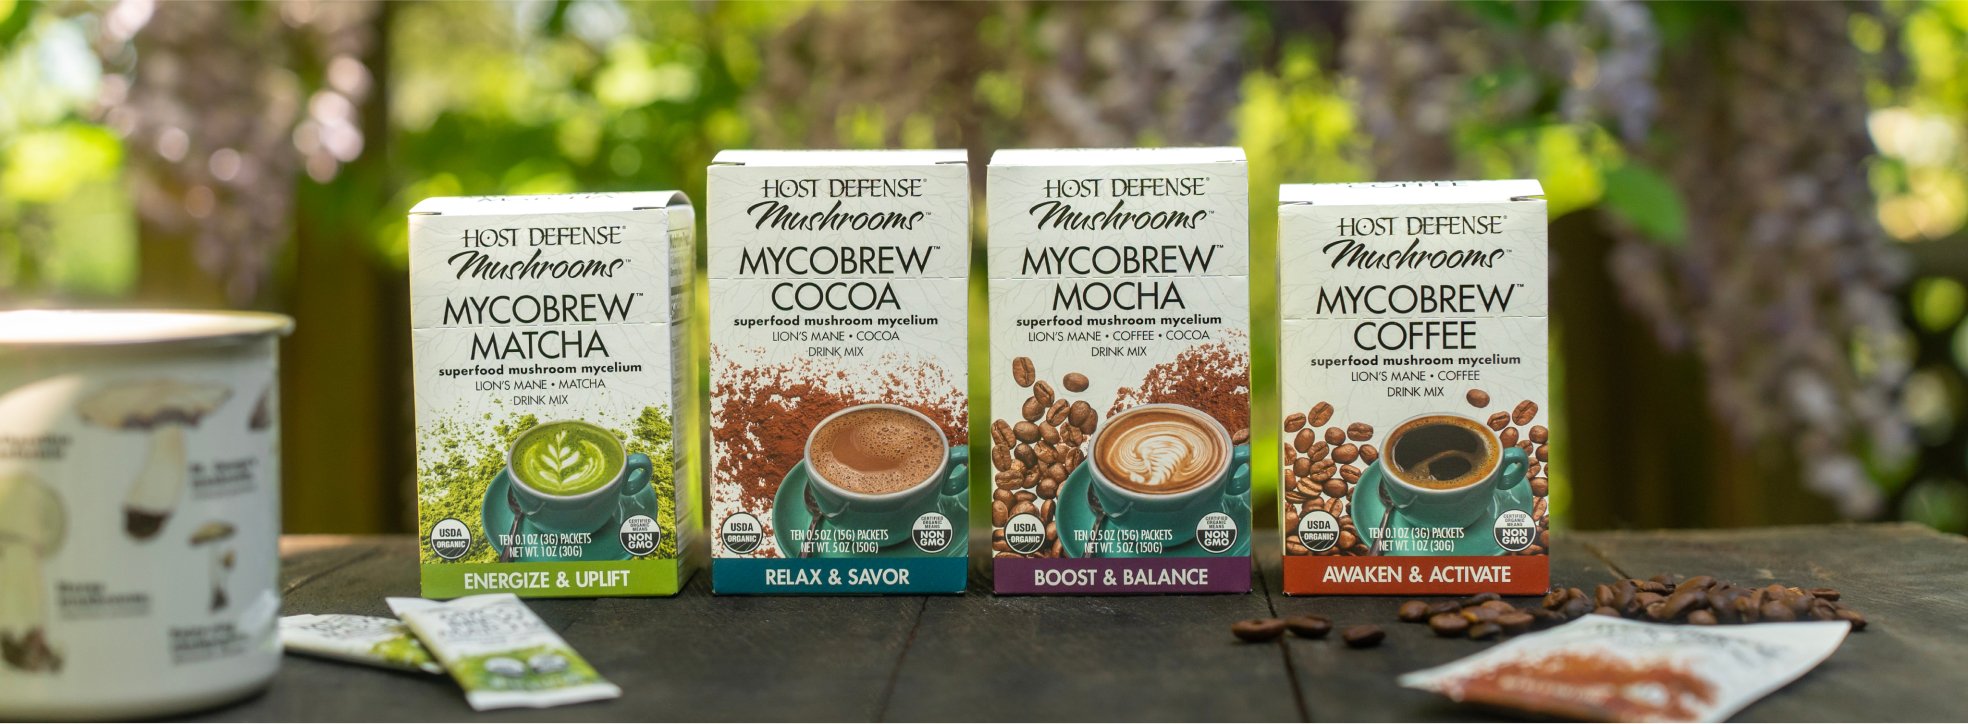 Mycobrew Products